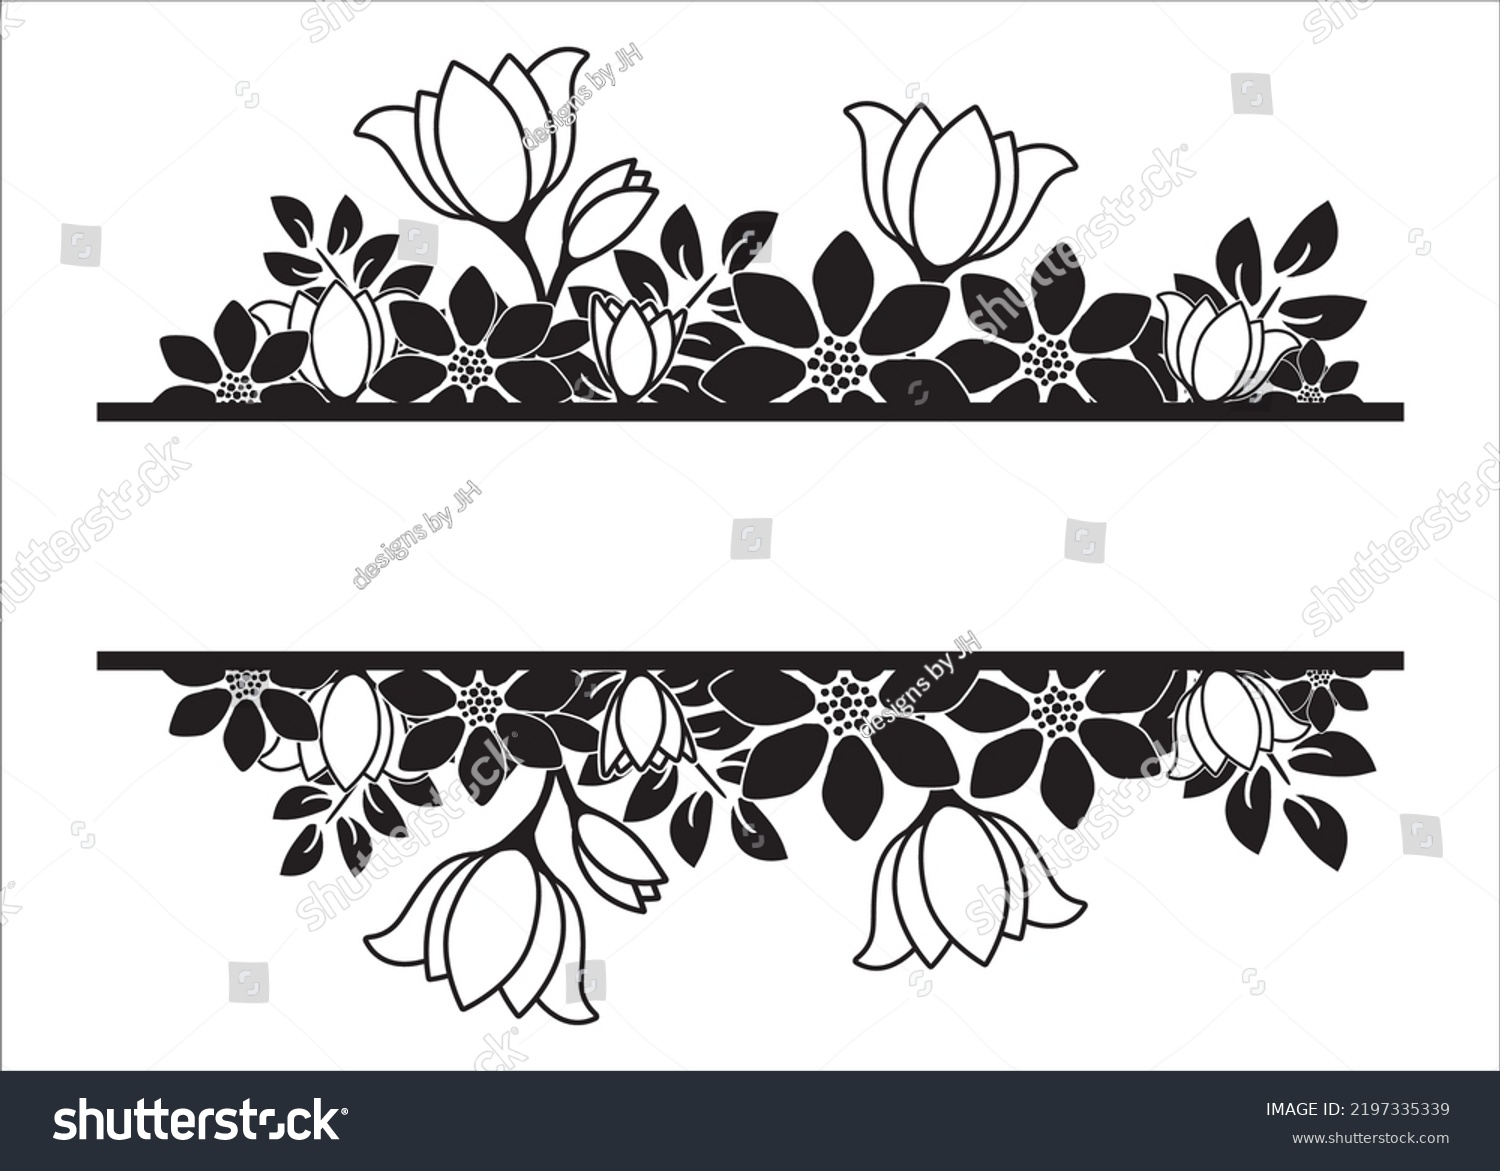 SVG of Elegant floral border for weddings, greeting card, invitations or banner. Floral design for svg cutting. Flower banner with floral design elements isolated on white svg